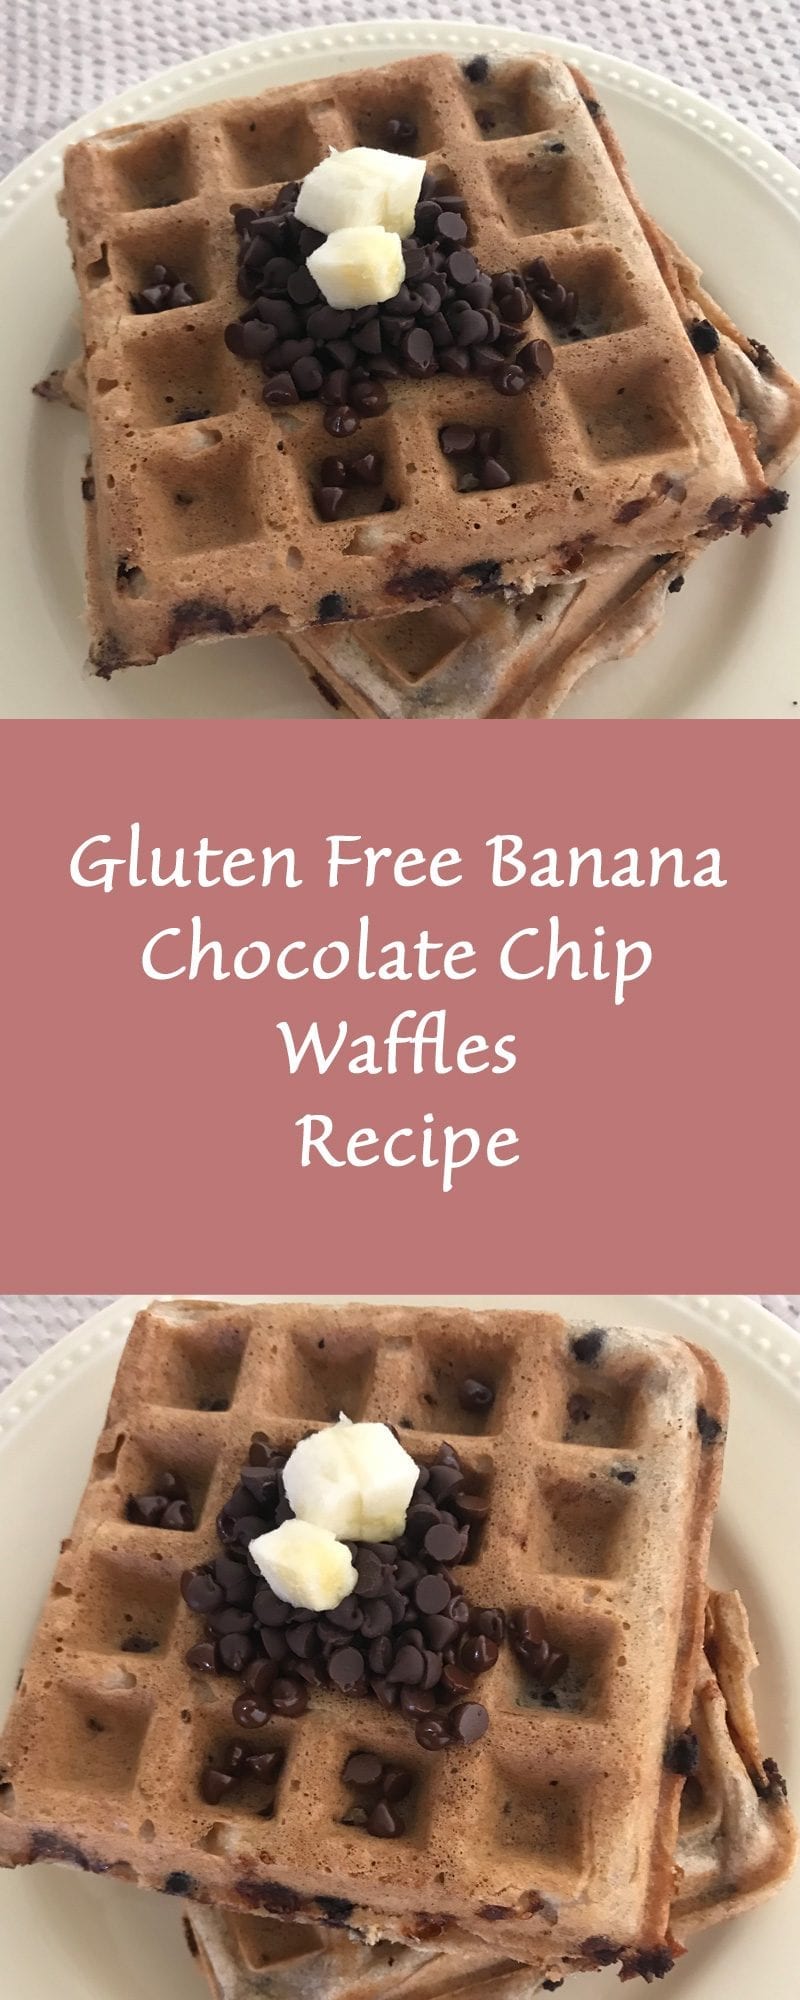 Gluten Free Banana Chocolate Chip Waffles Recipe